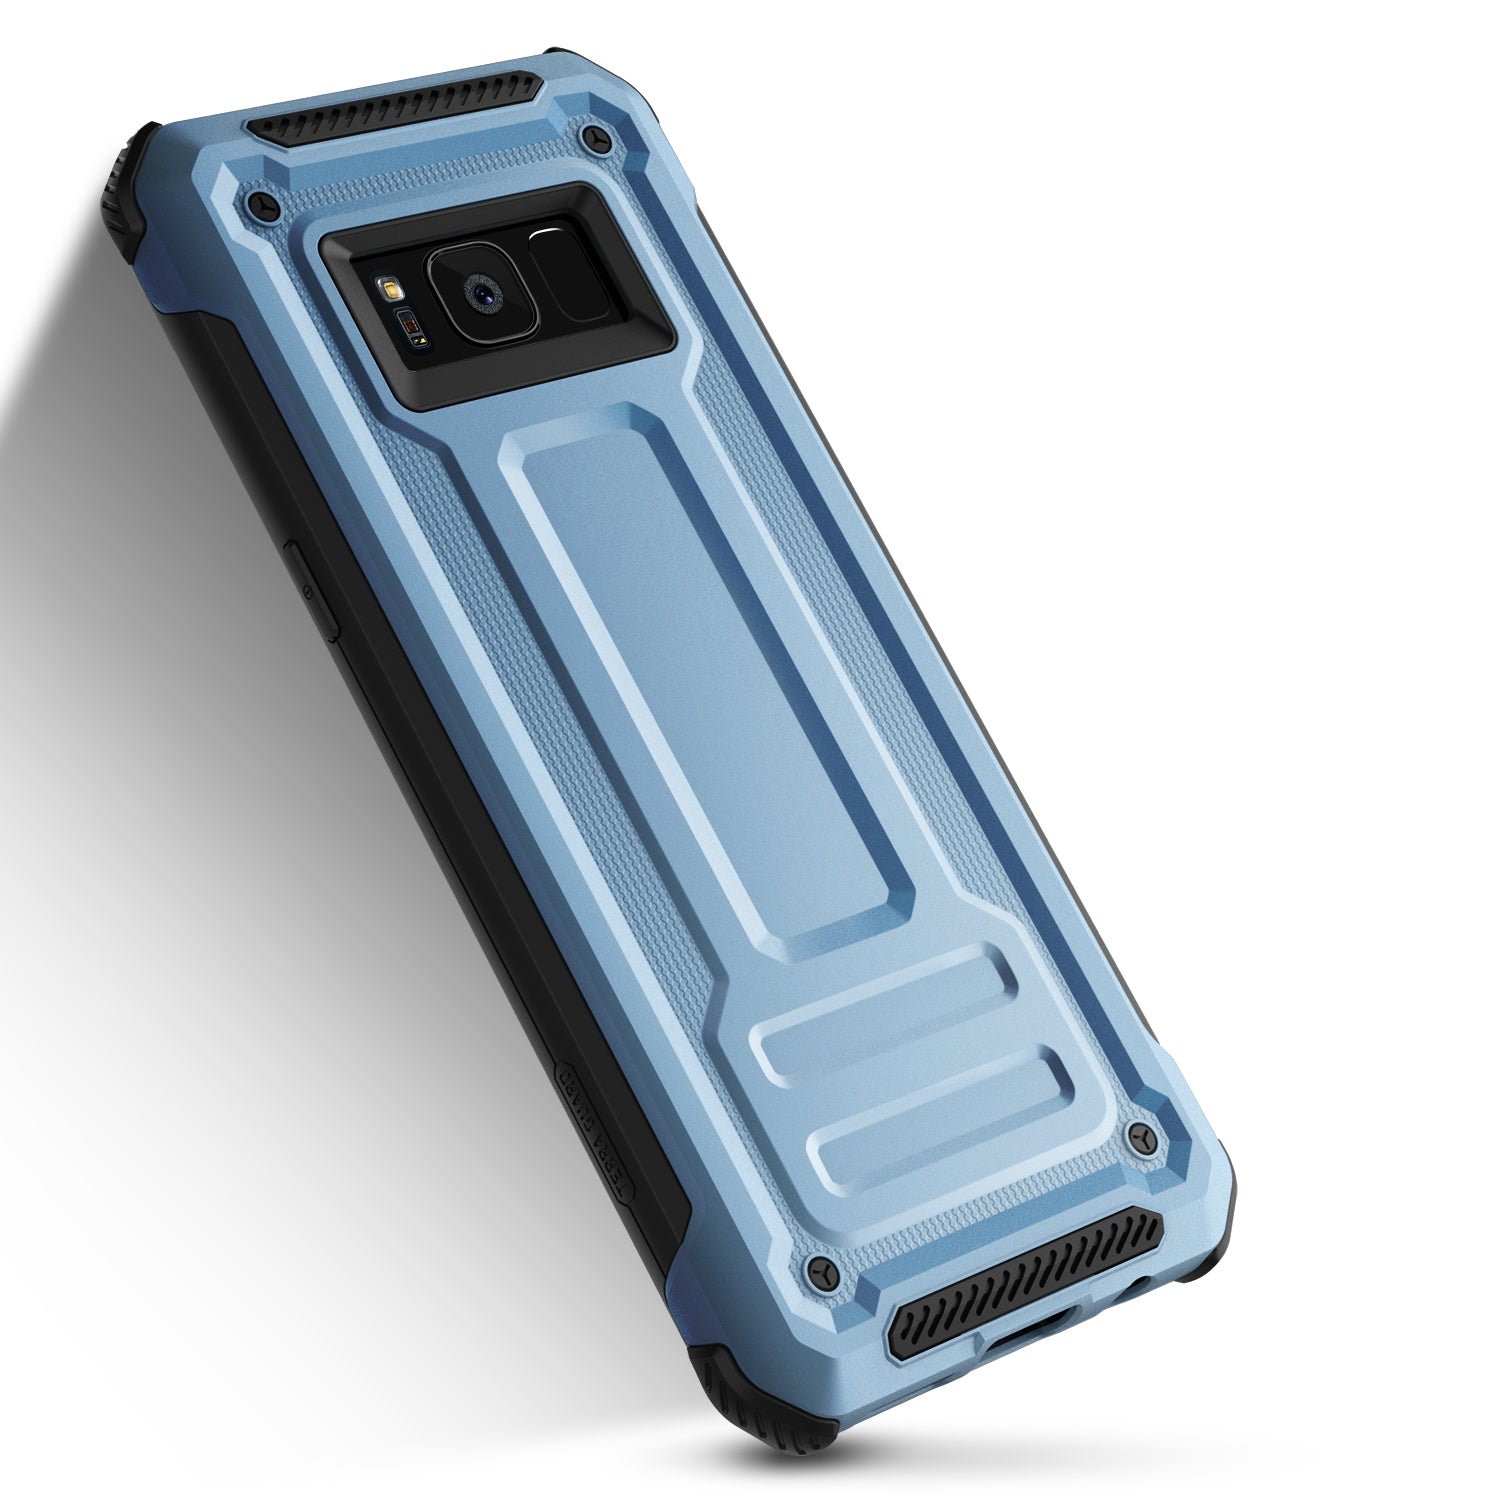 Terra Guard Series For Galaxy S8 Anti Shocks Tough Rugged Case Original From VRS Blue